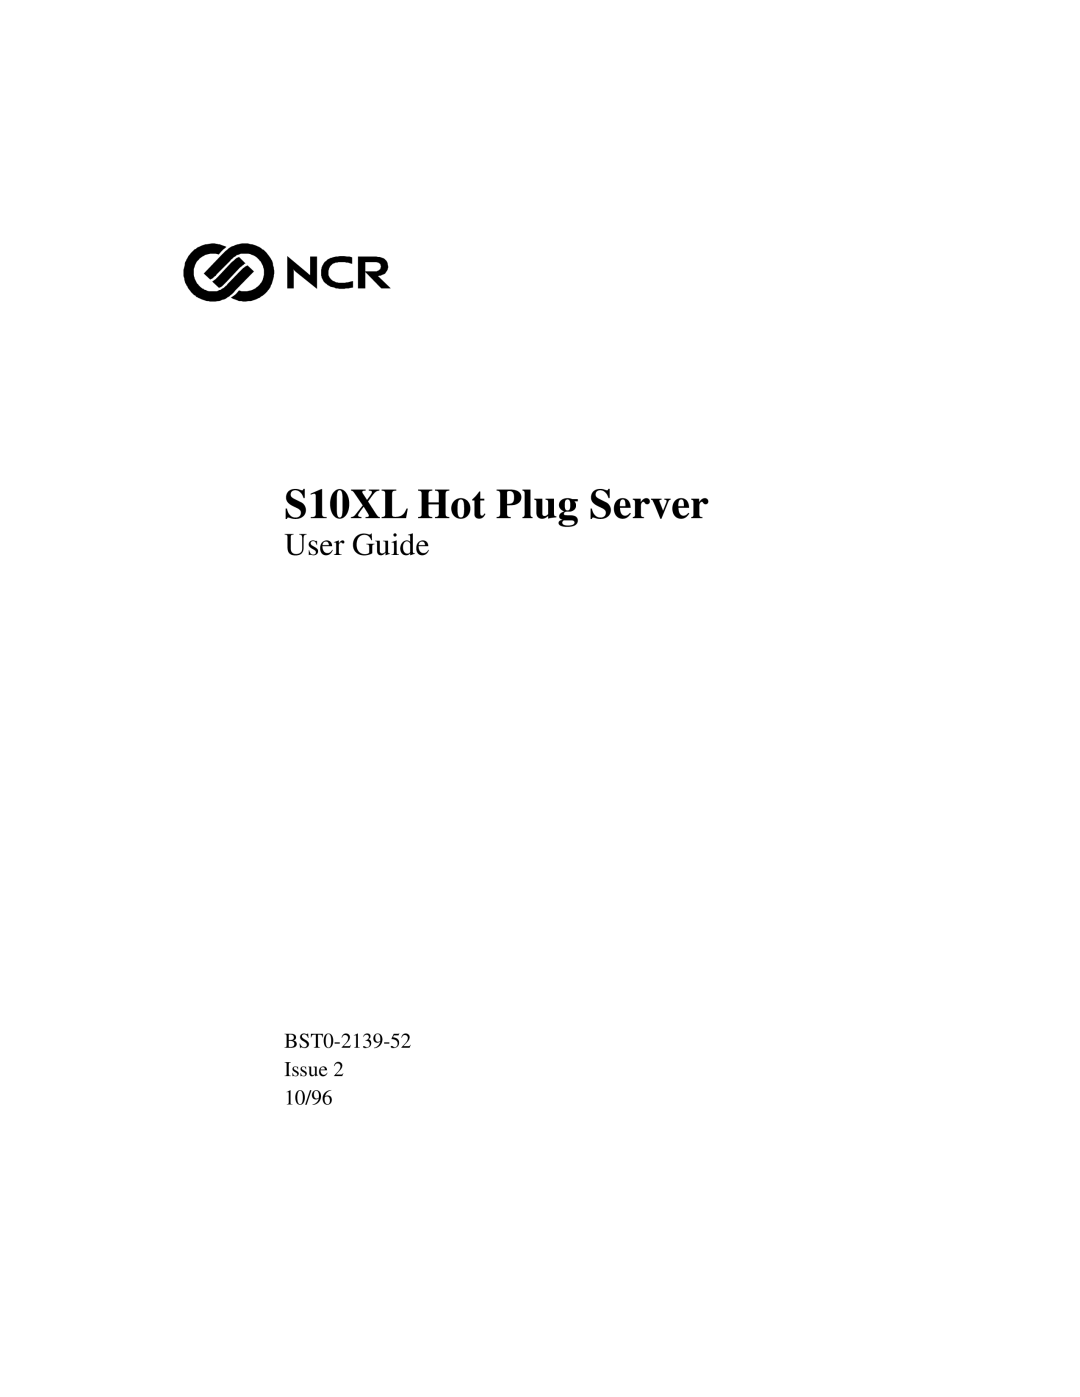 NCR manual S10XL Hot Plug Server 